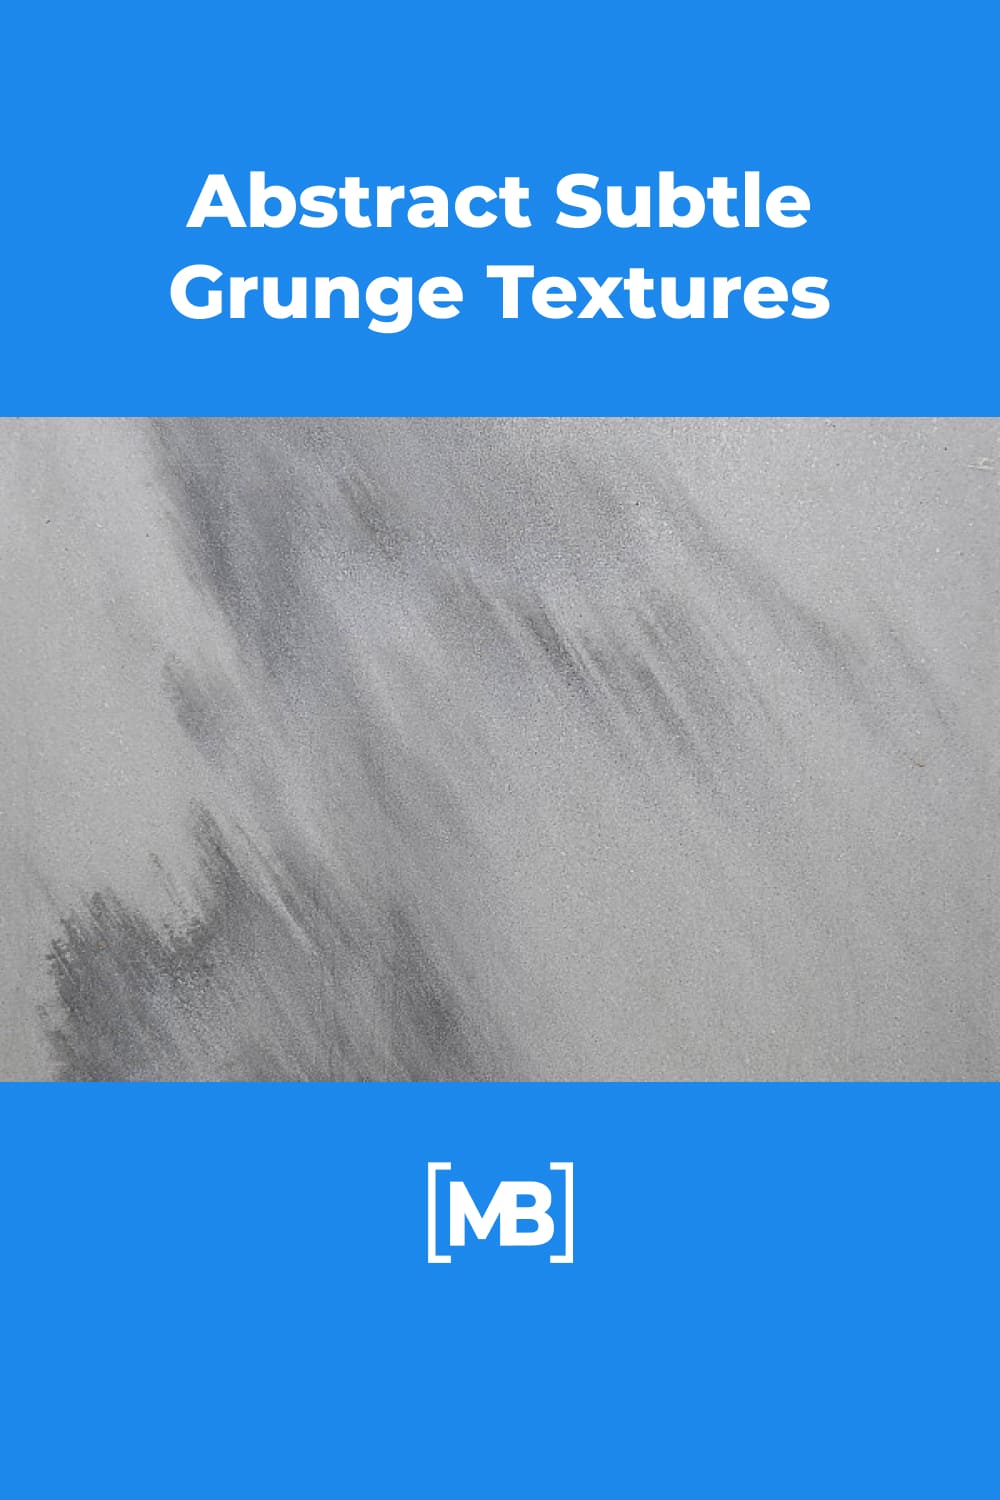 Abstract subtle grunge textures surface background closeup set.